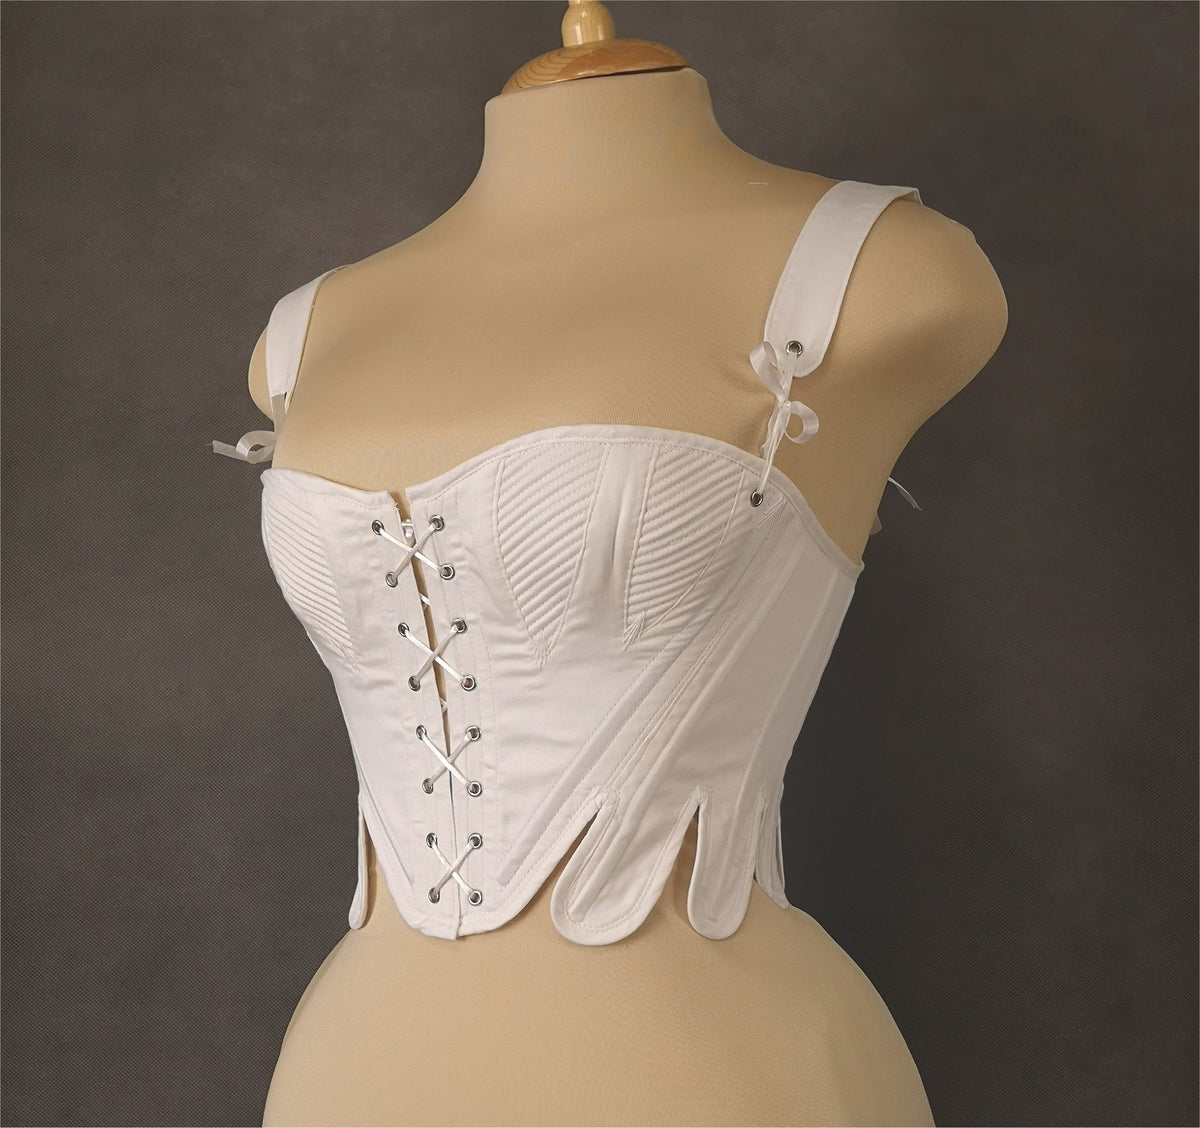 Ventilated Victorian corset 1890s - Custom order  –  Nemuro Corsets